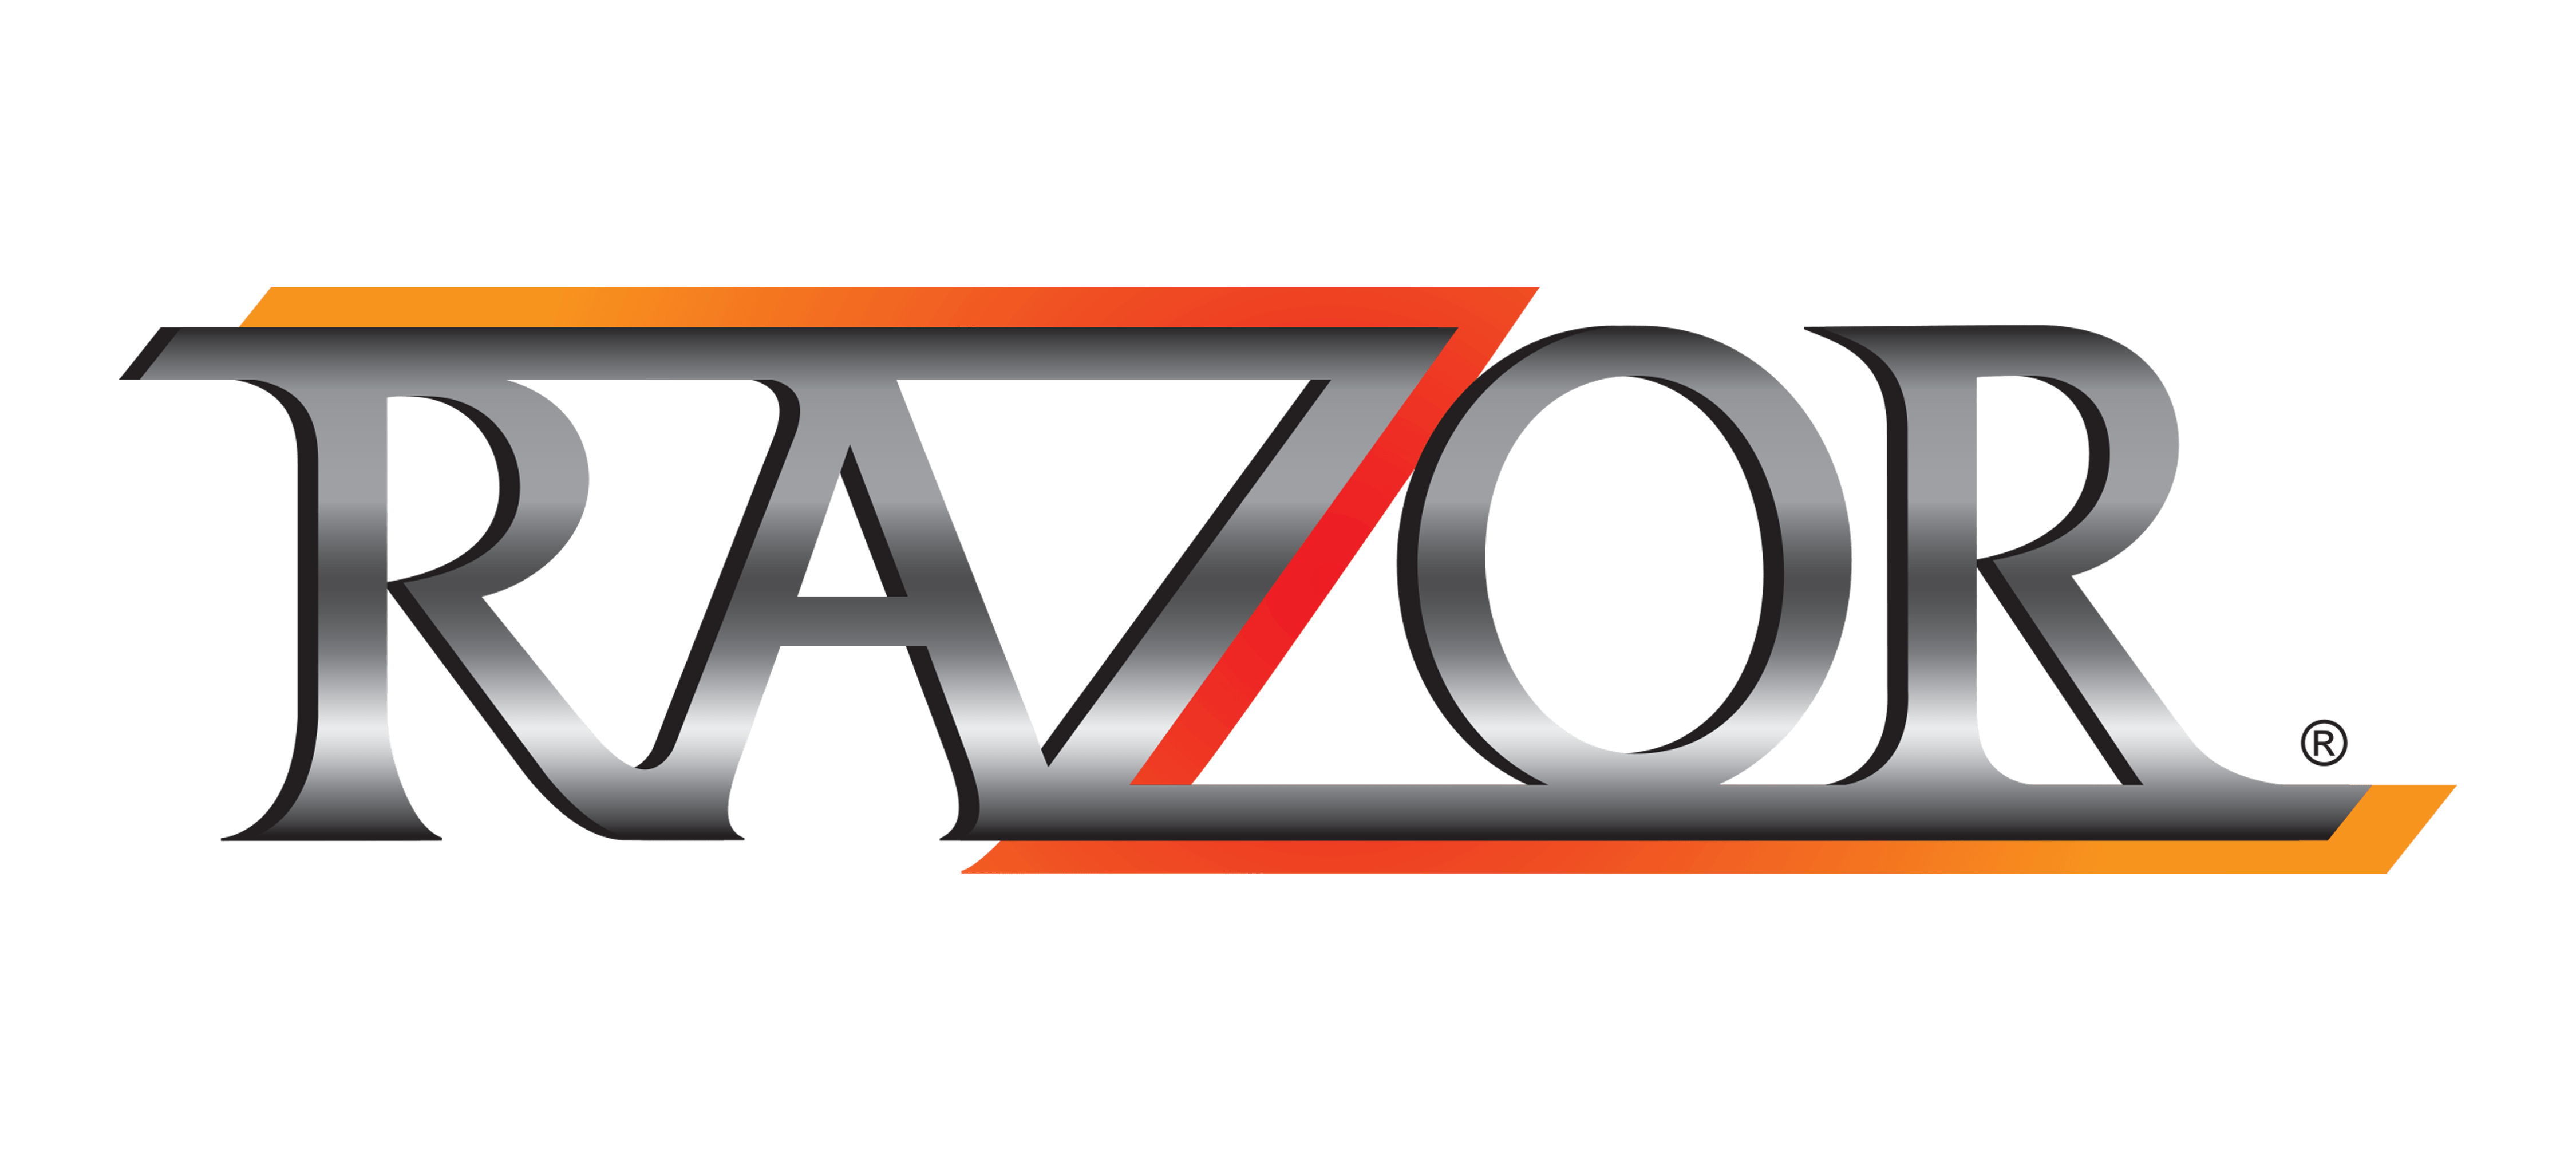 Razor Logo - LOGOS: Download Washworld Product Logos